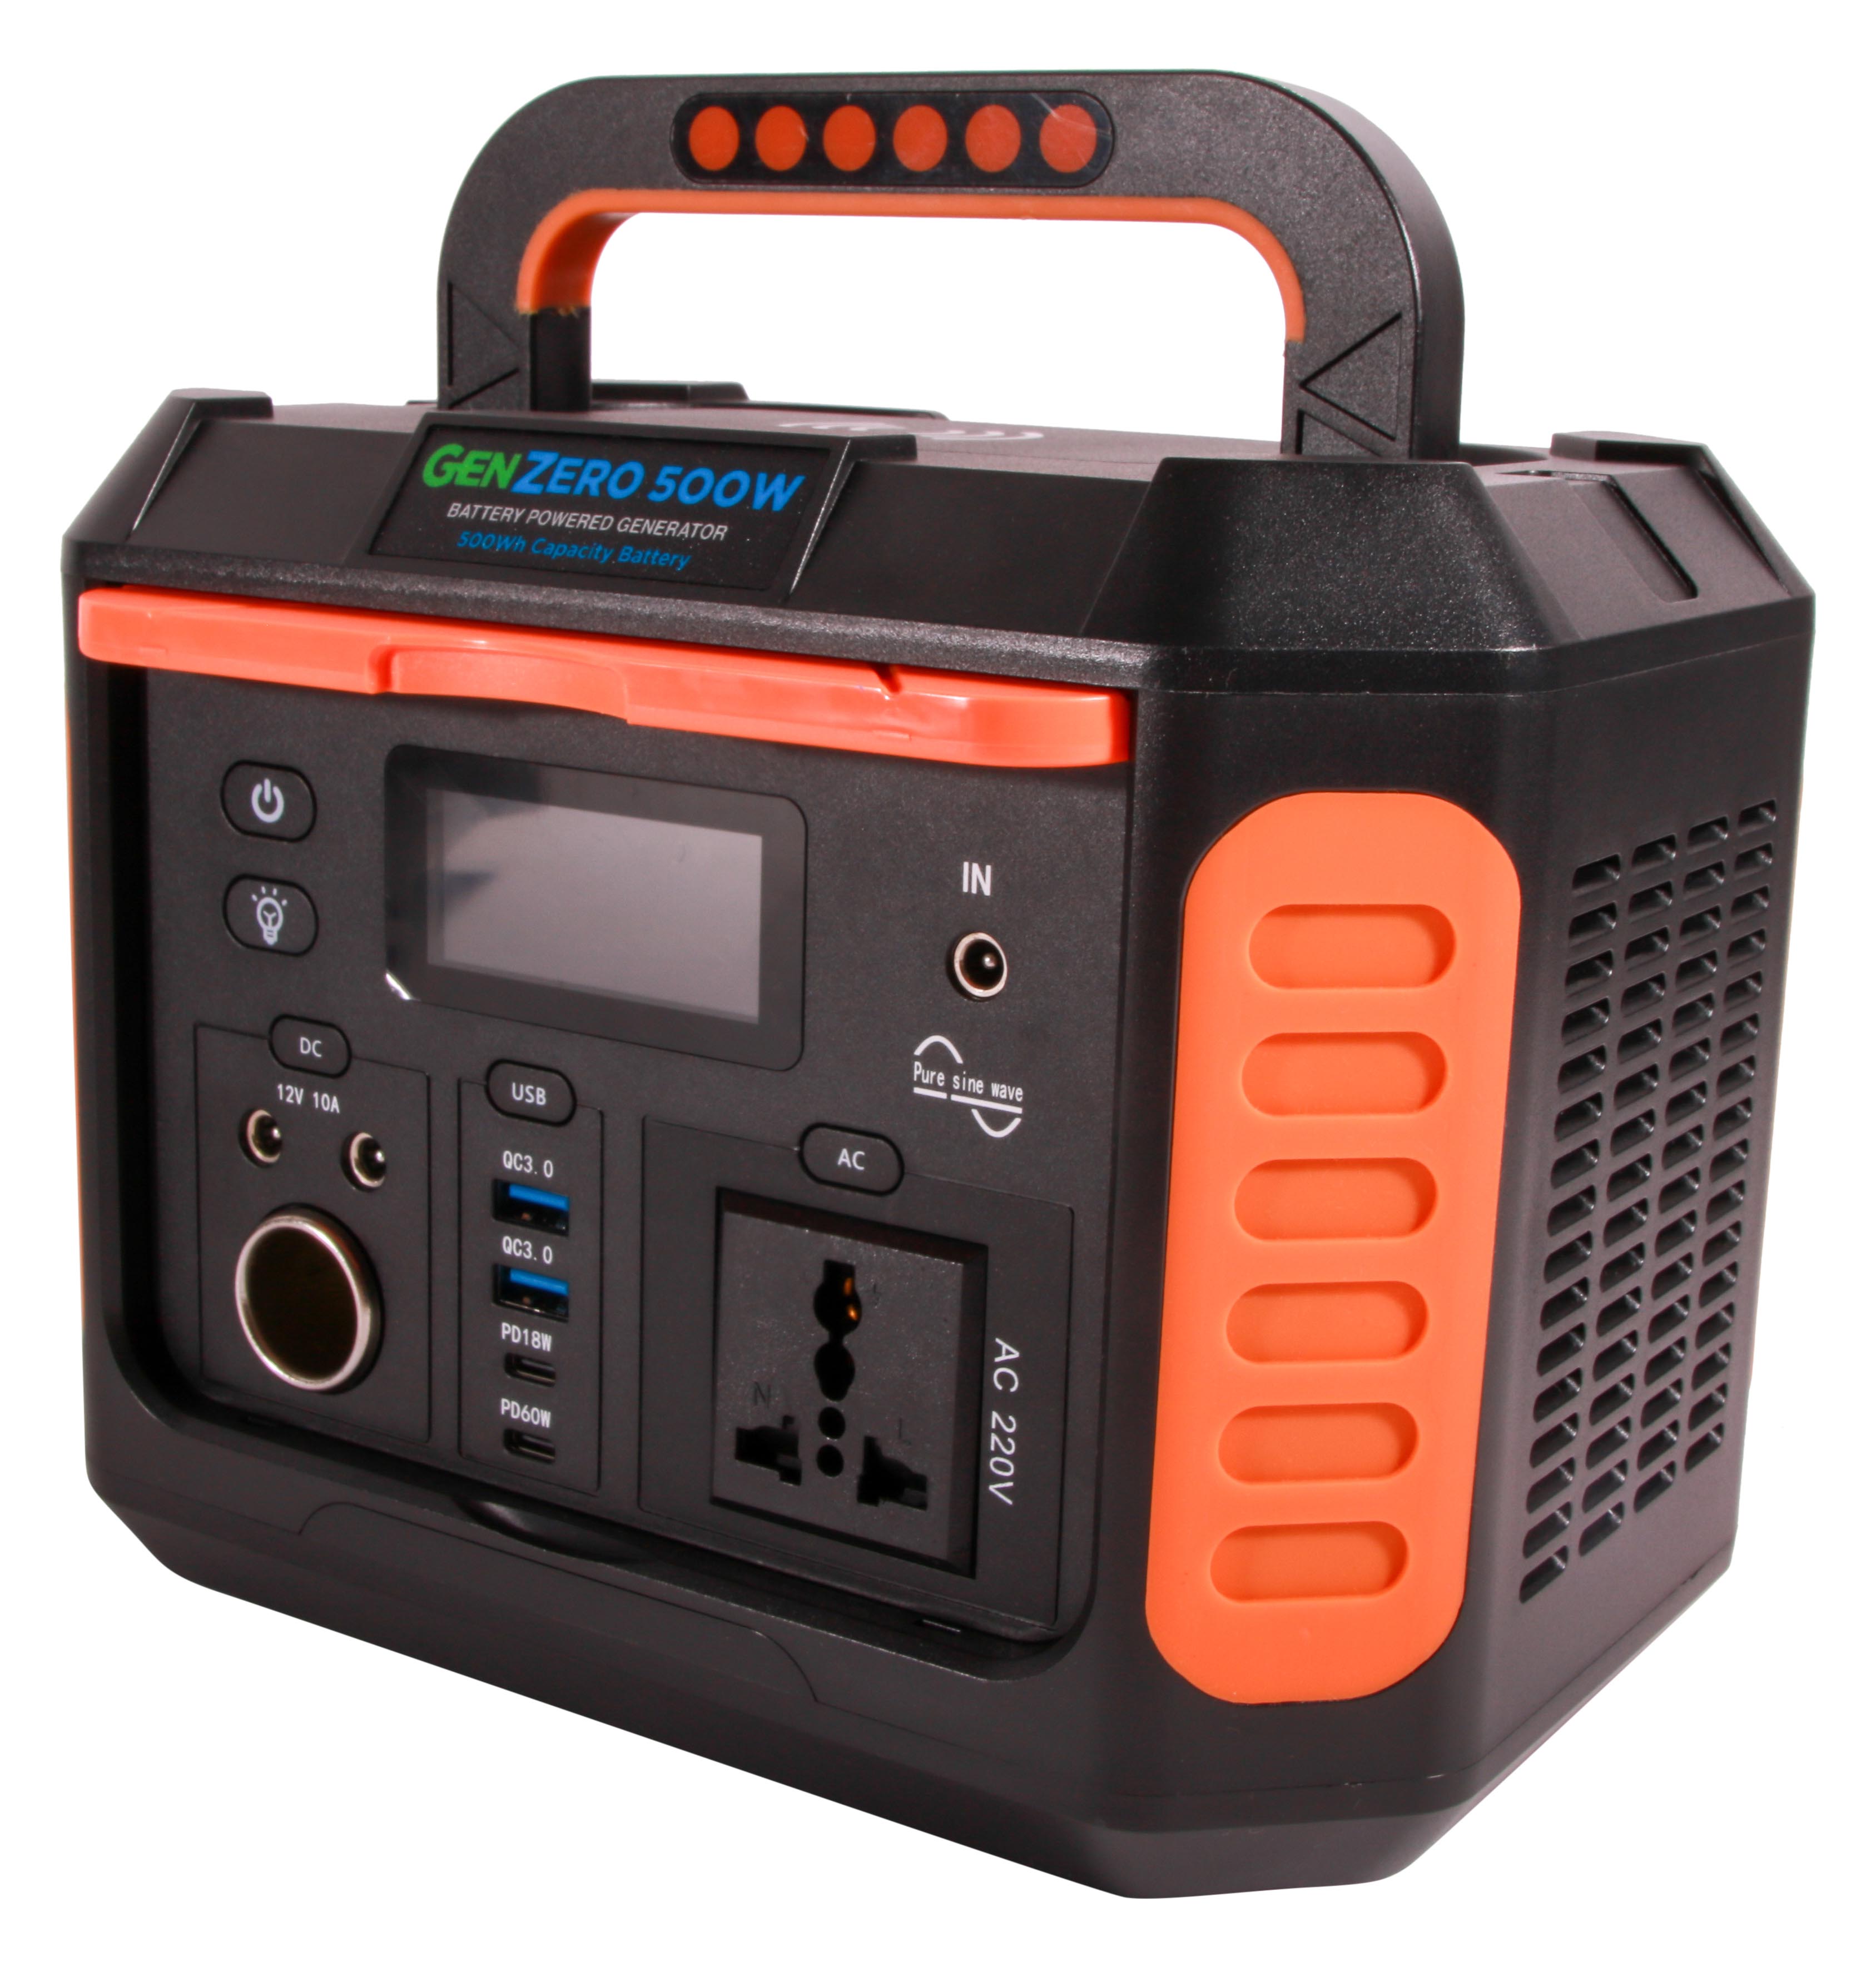 NightSearcher GenZero 500W/230V Battery Powered Generator